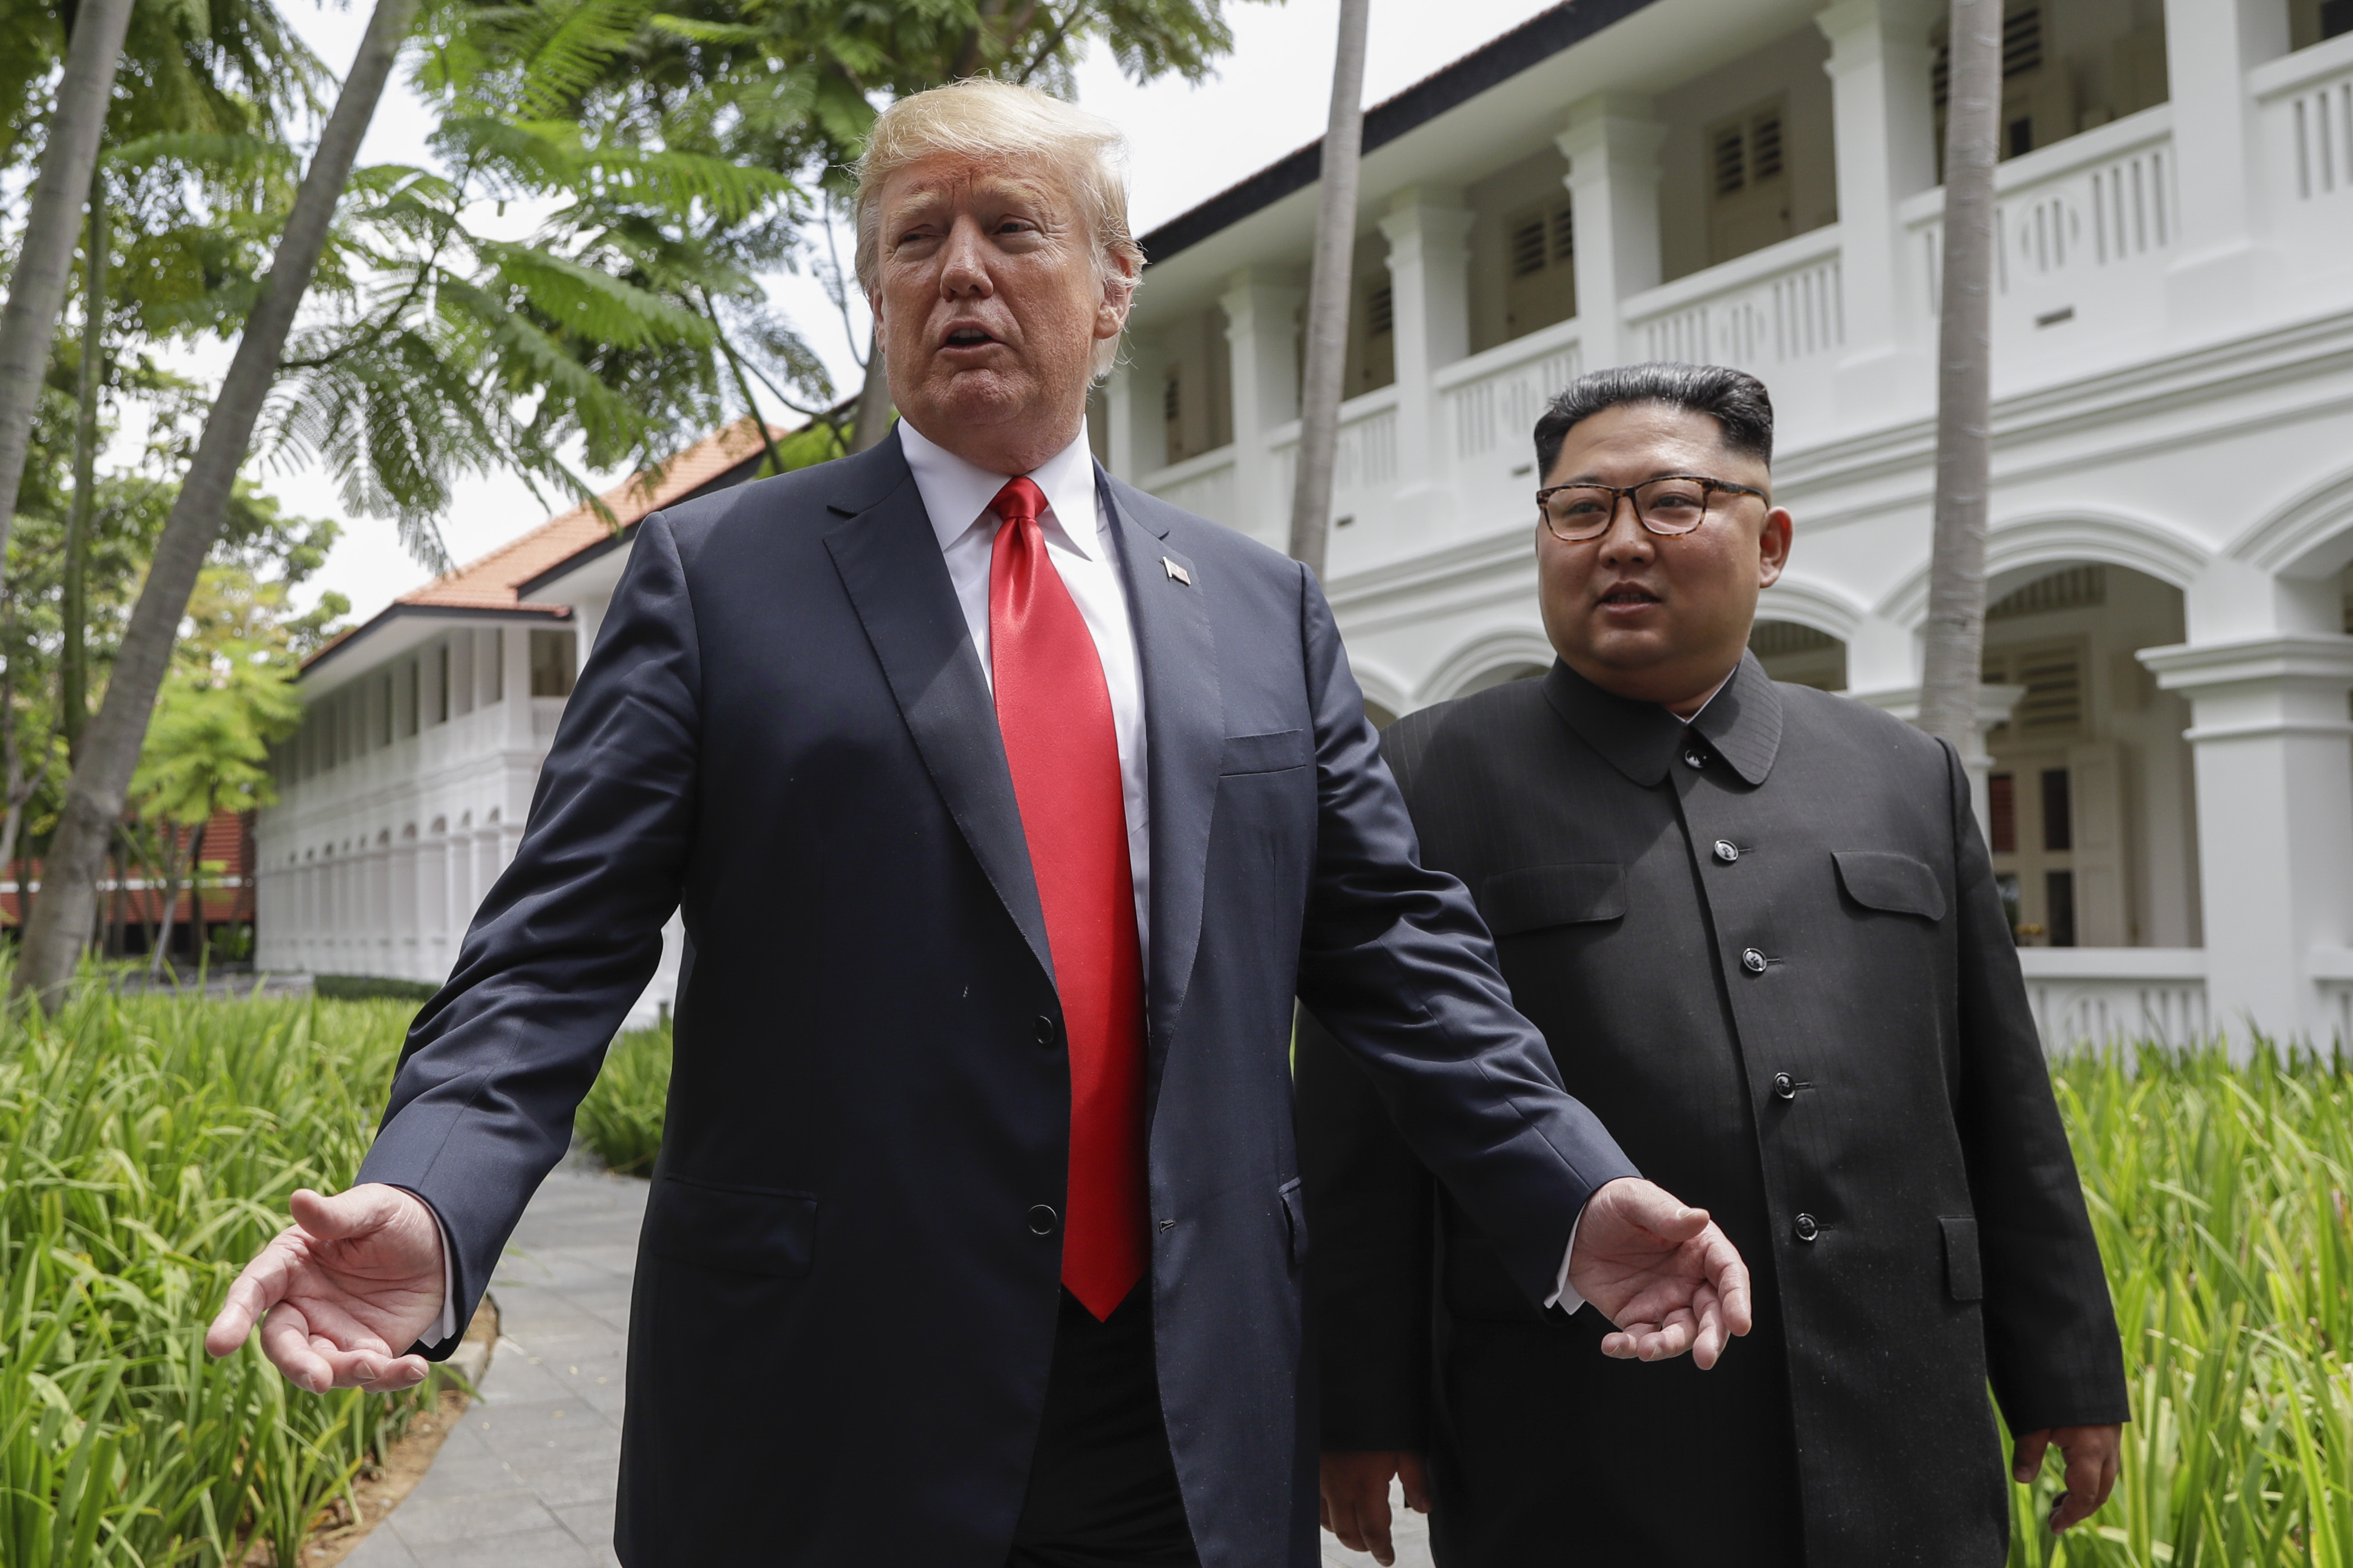 Fire, fury, love? The mythology behind the Trump-Kim summit